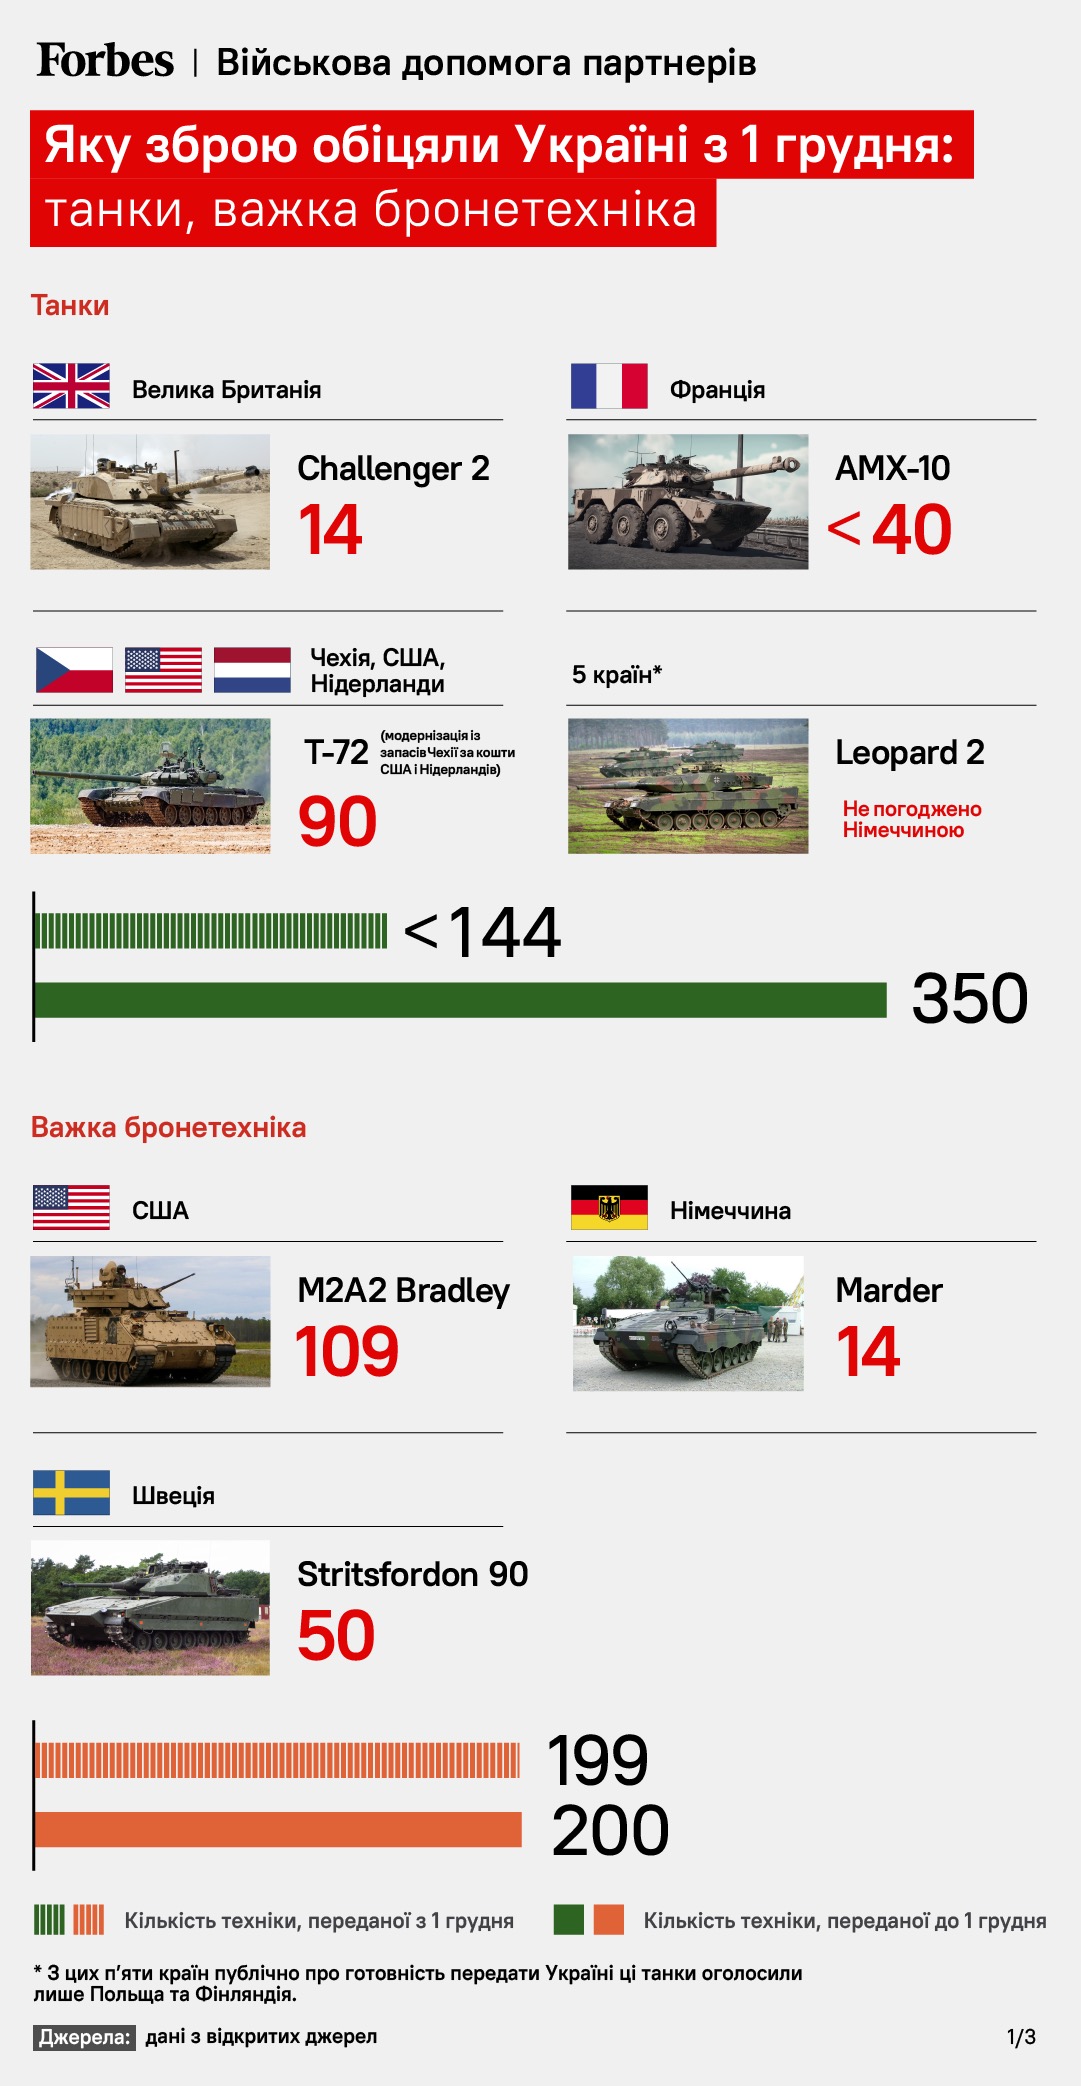 “Рамштайн” и танки: Украина получит 1300 единиц бронетехники. Как это изменит ситуацию на фронте /Фото 1